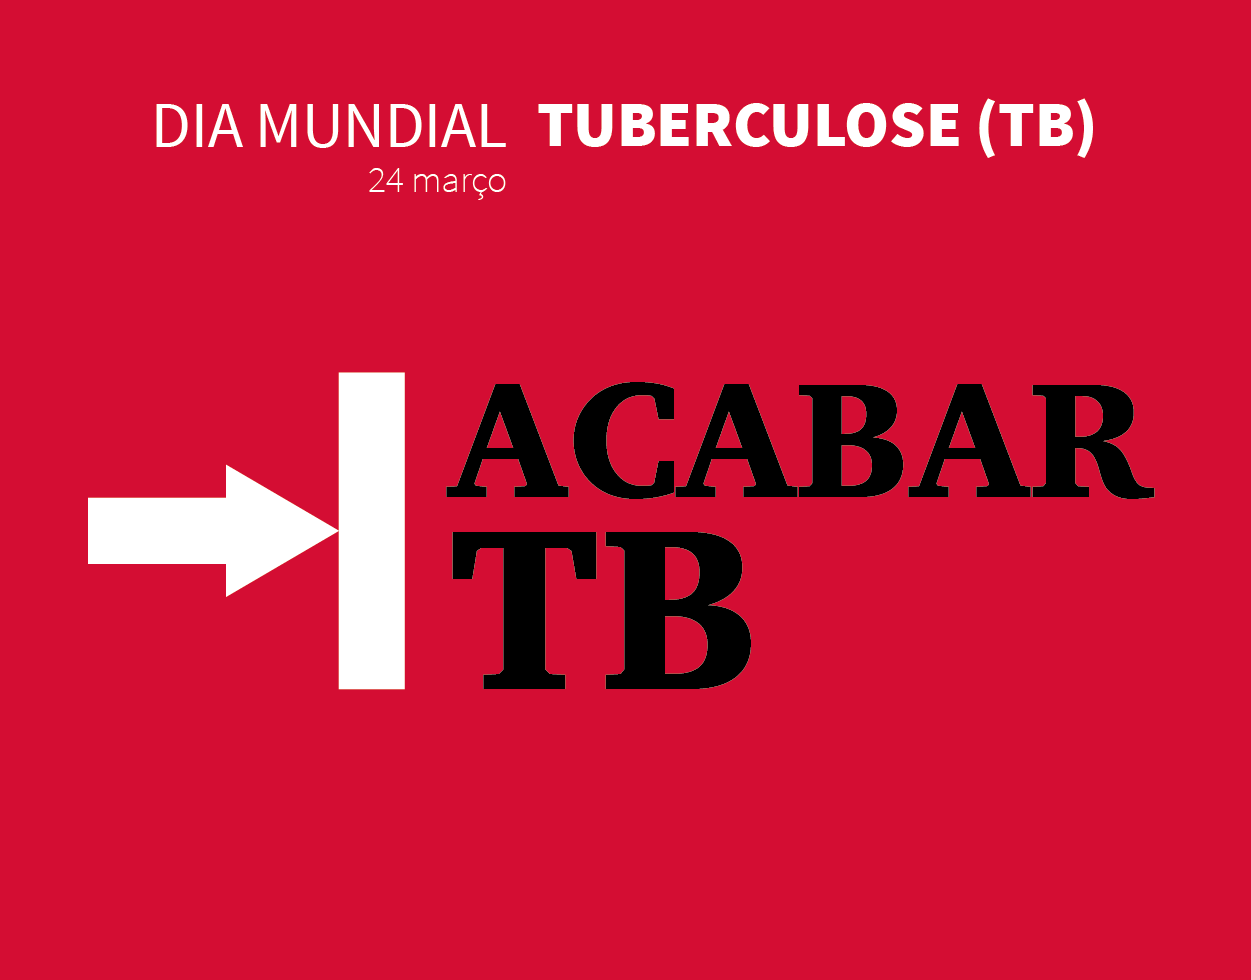 Dia Mundial da Tuberculose (TB)